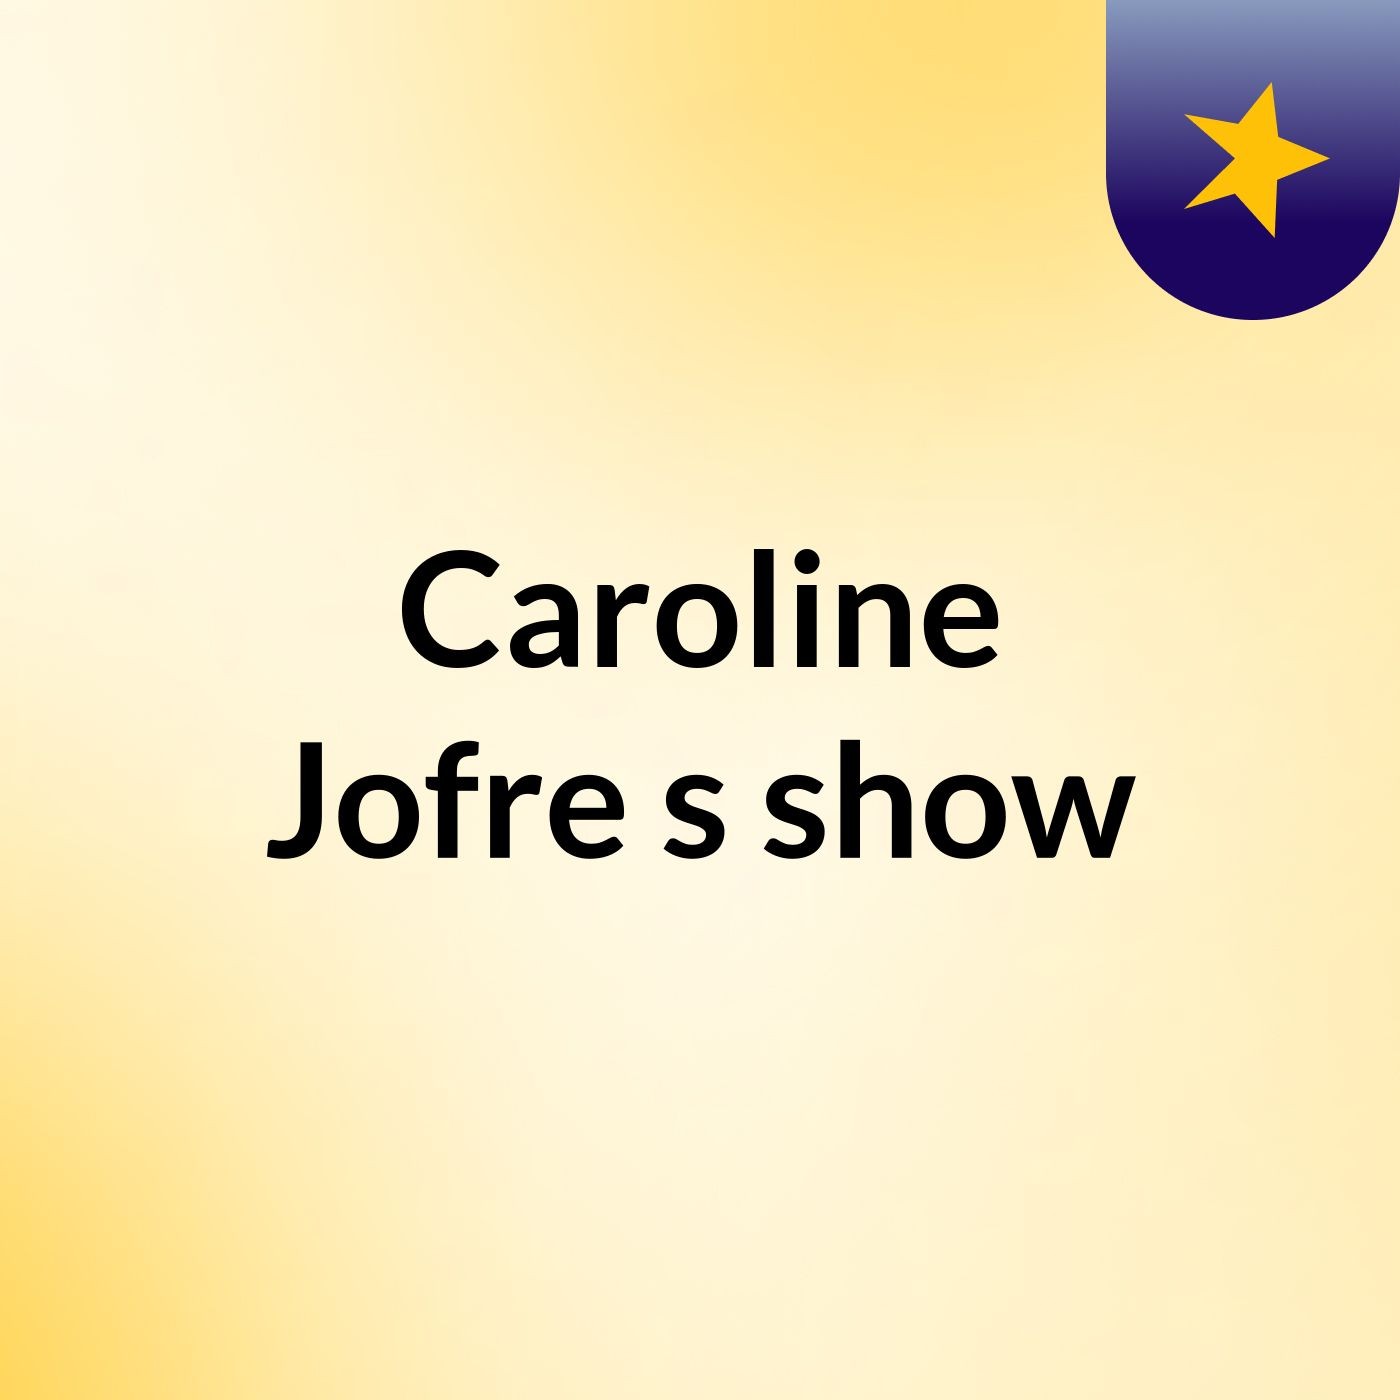 Caroline Jofre's show